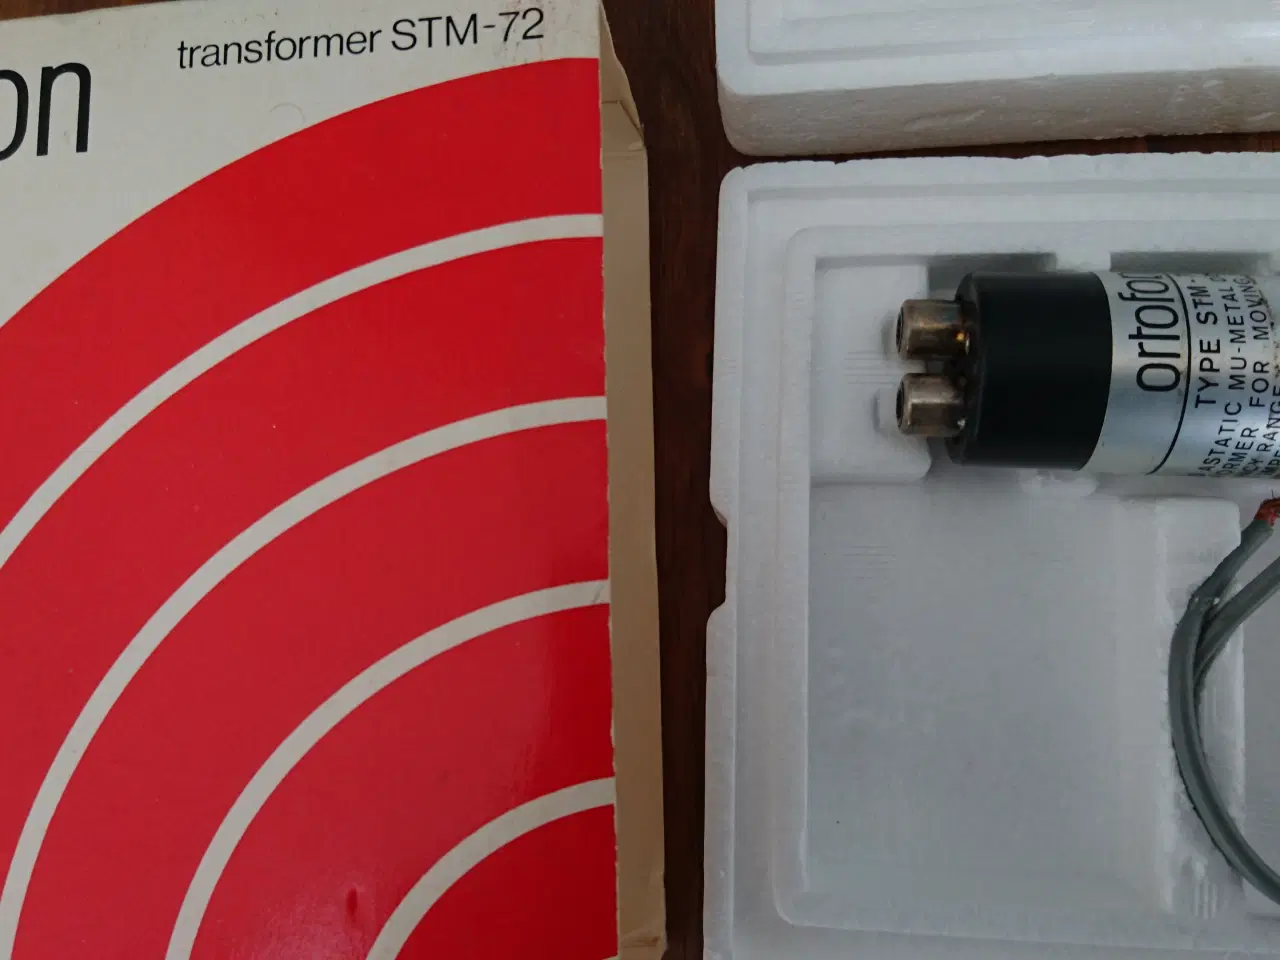 Billede 2 - Ortofon transformer stm-72